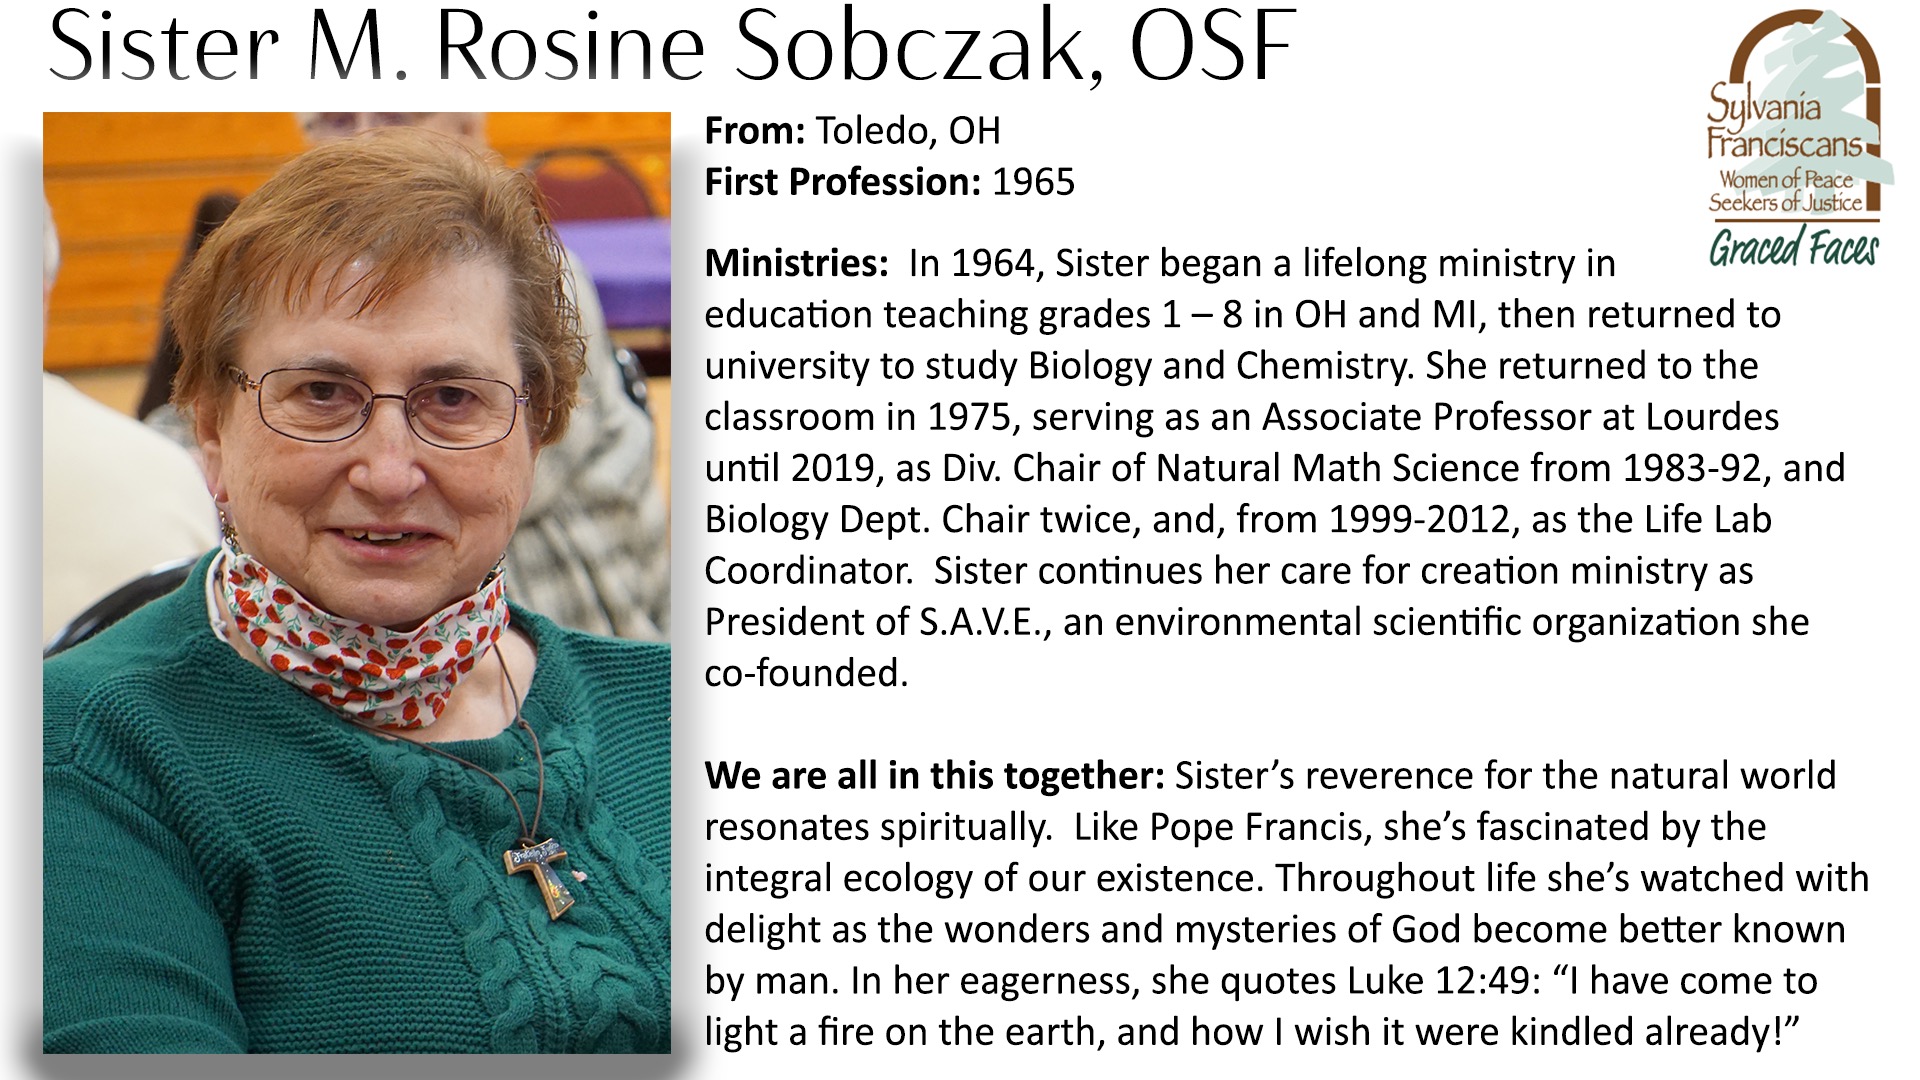 Sister M. Rosine Sobczak, OSF